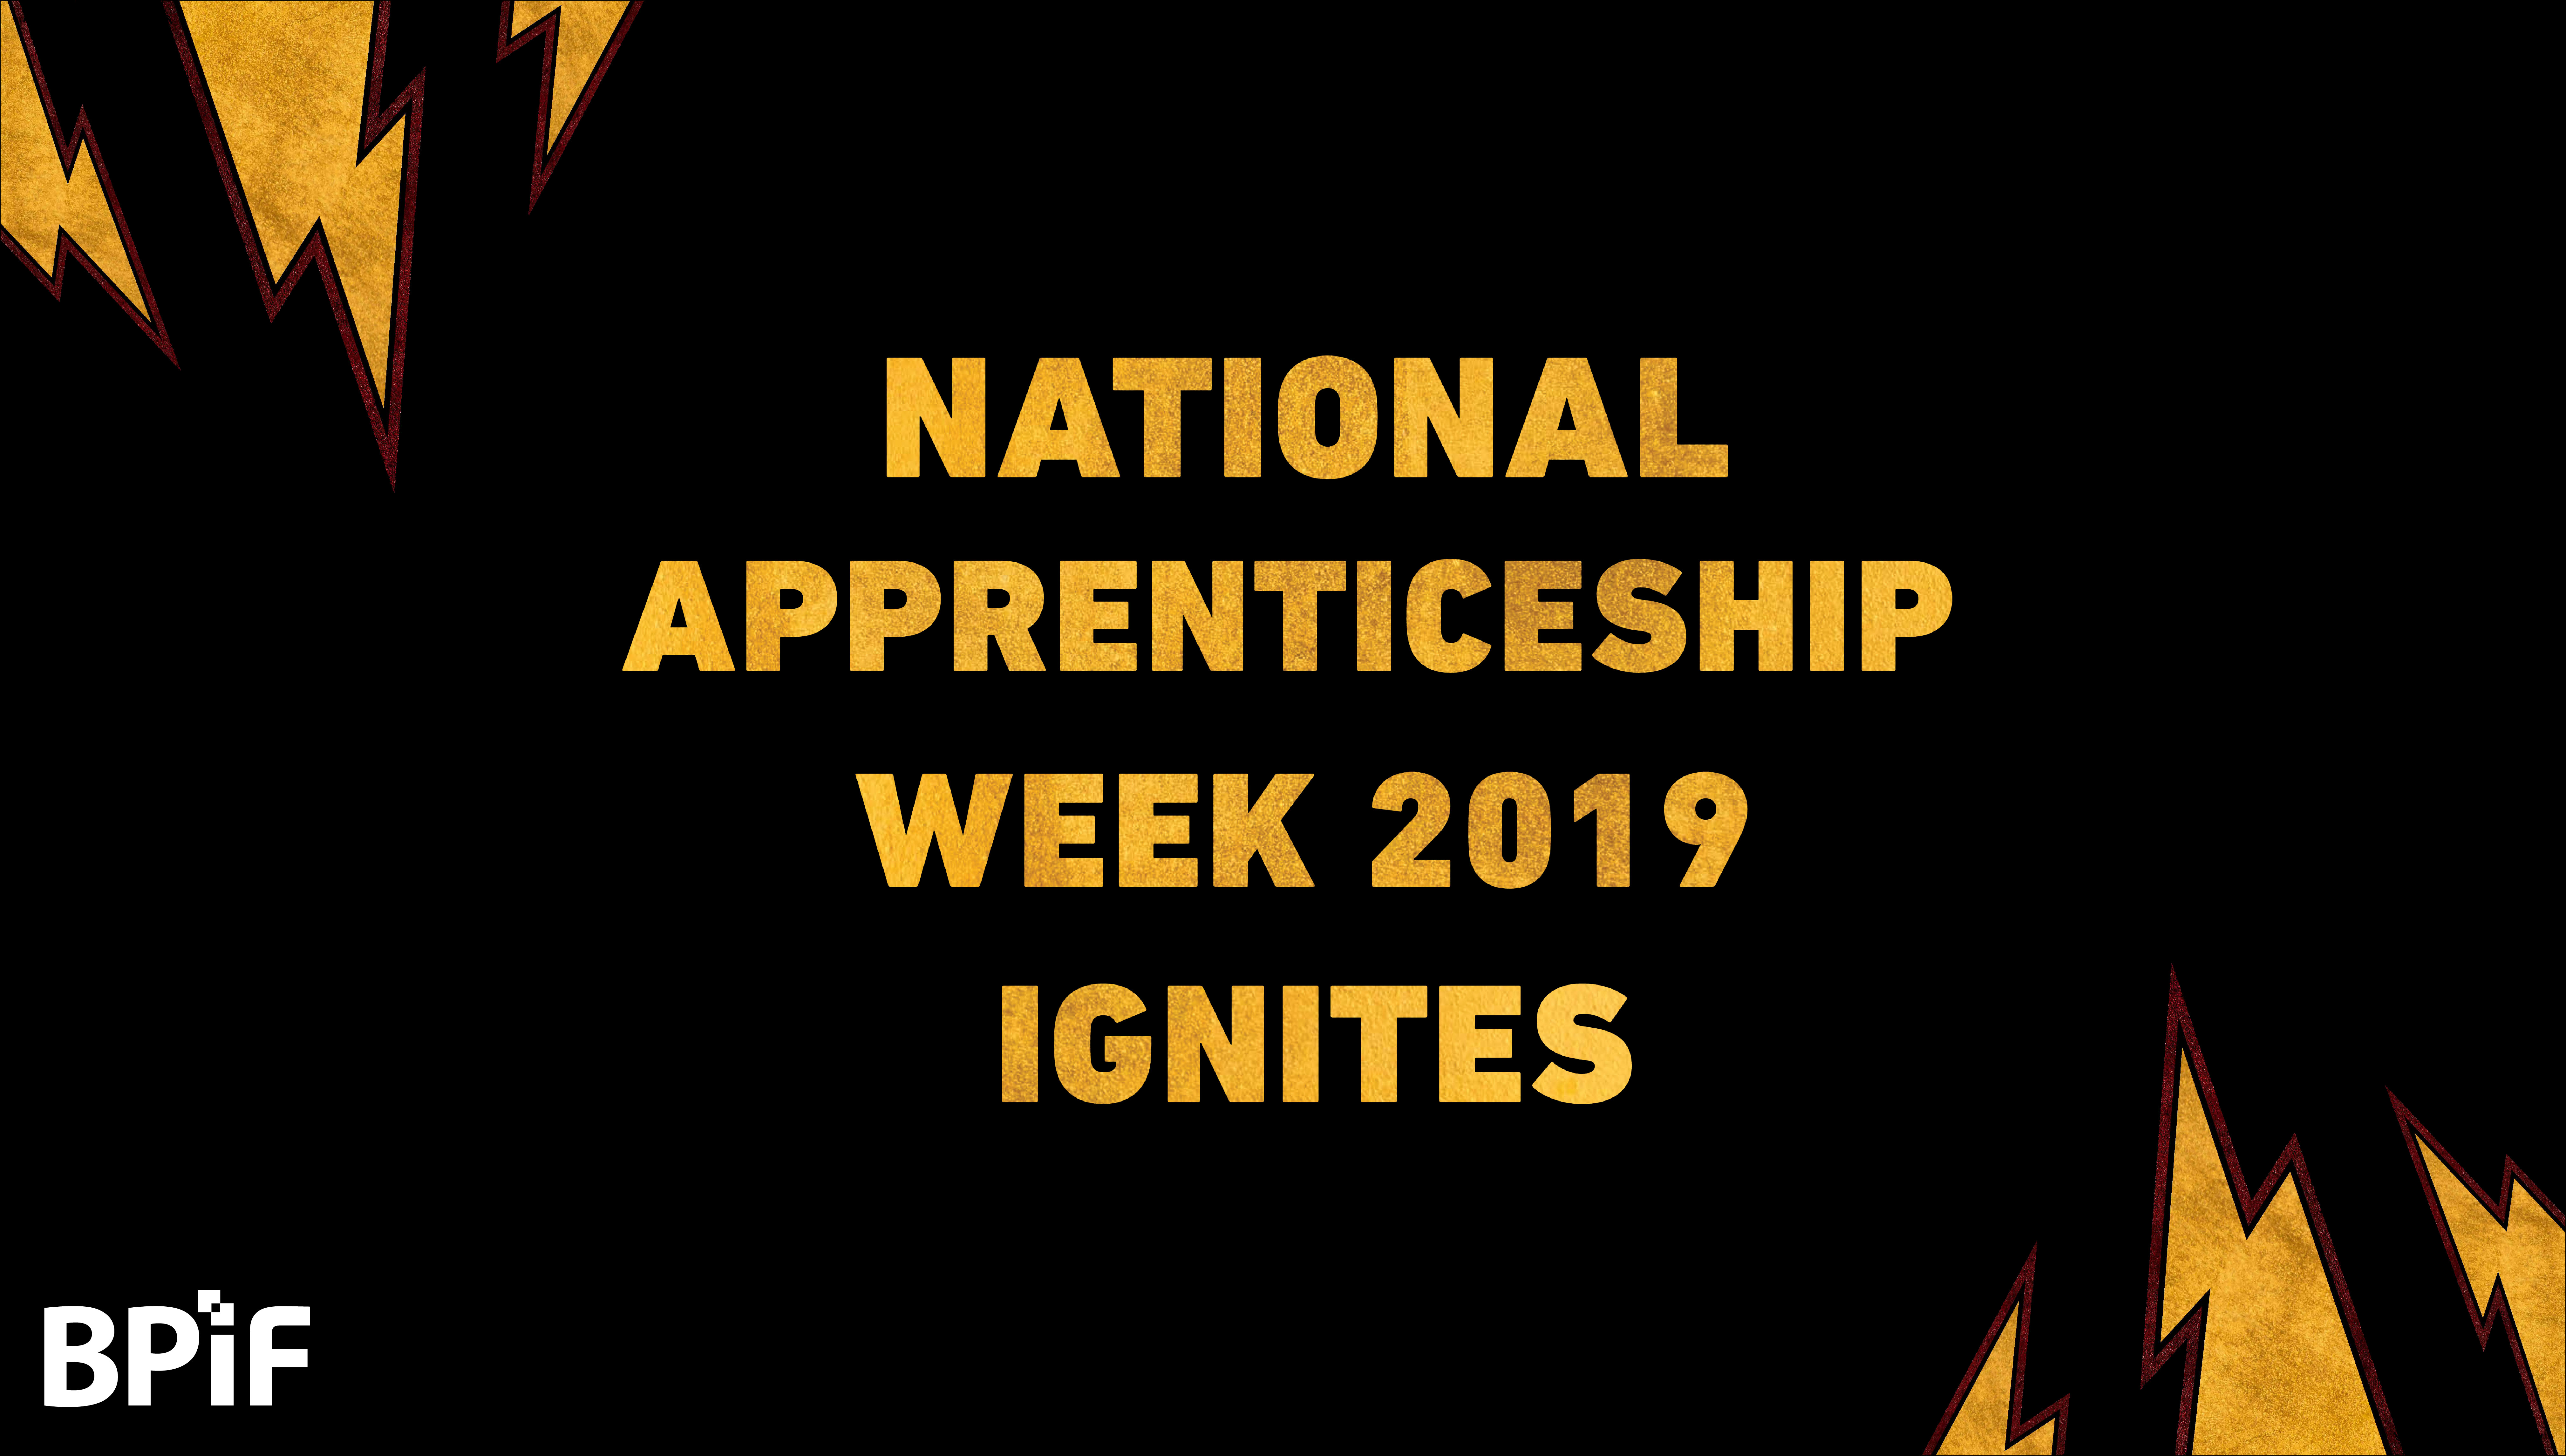 National Apprenticeship Week 2019